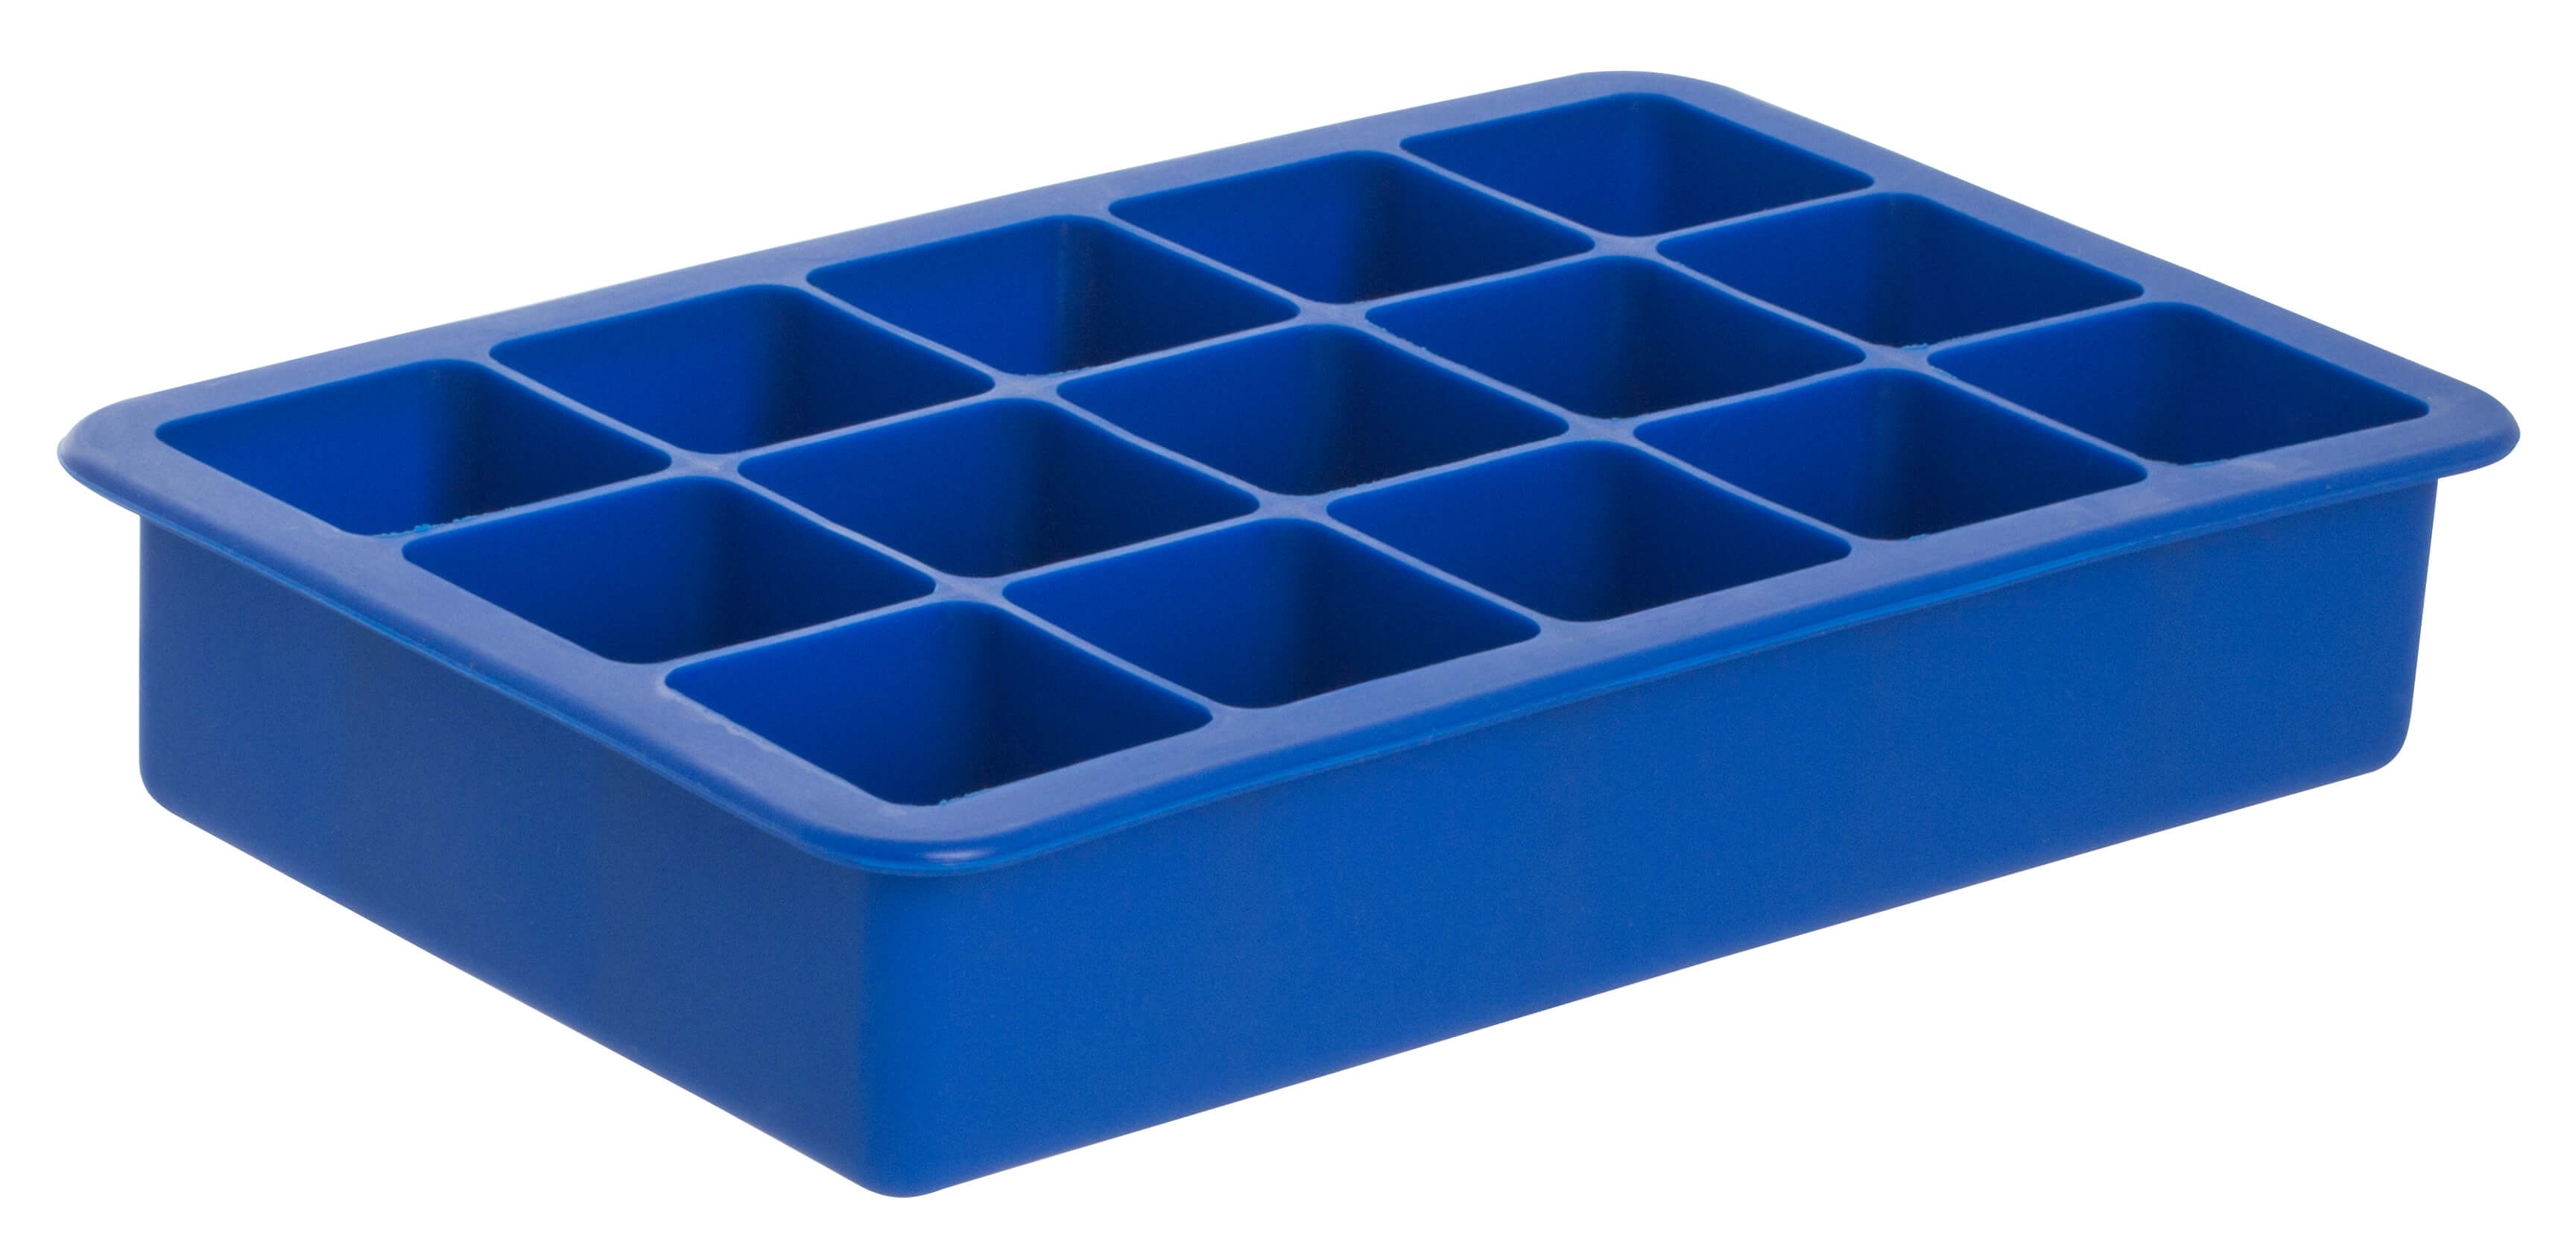 Ice tray cubes (3,2cm) - blue